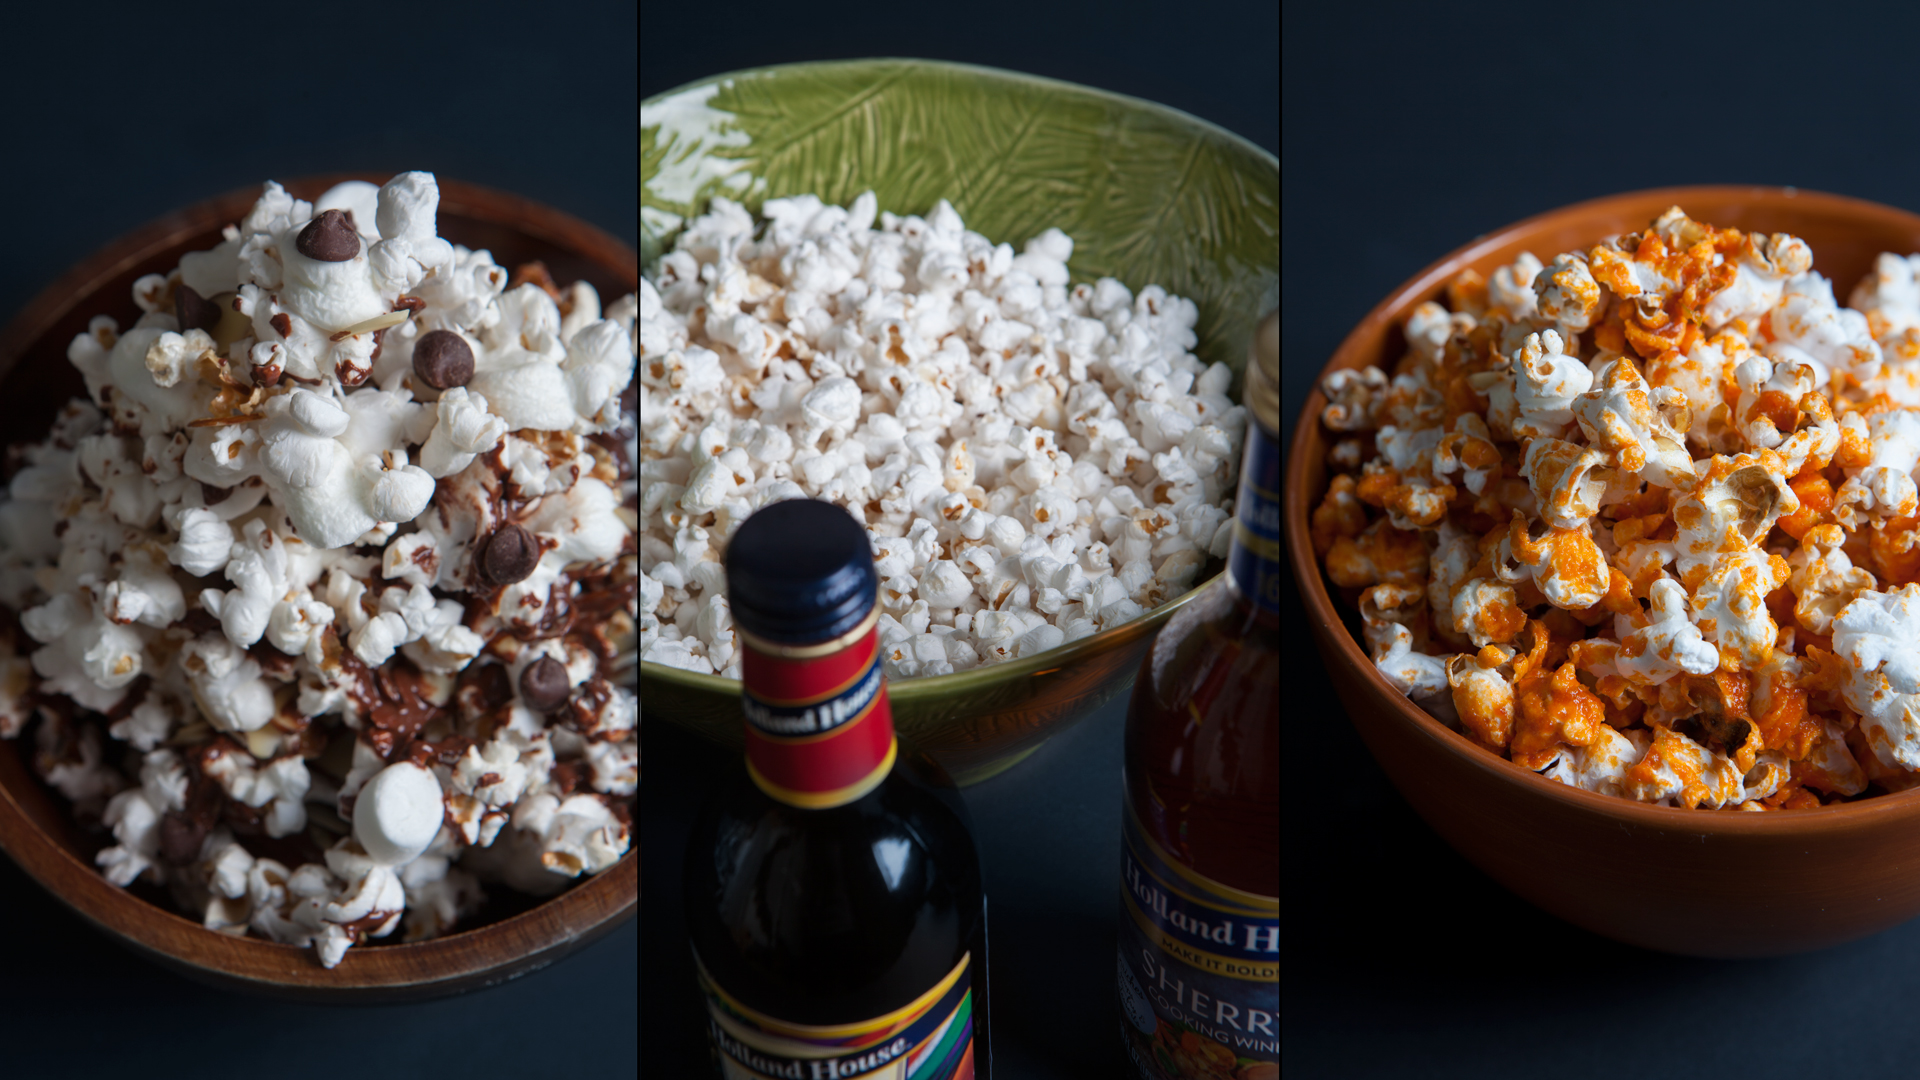 Three types of popcorn